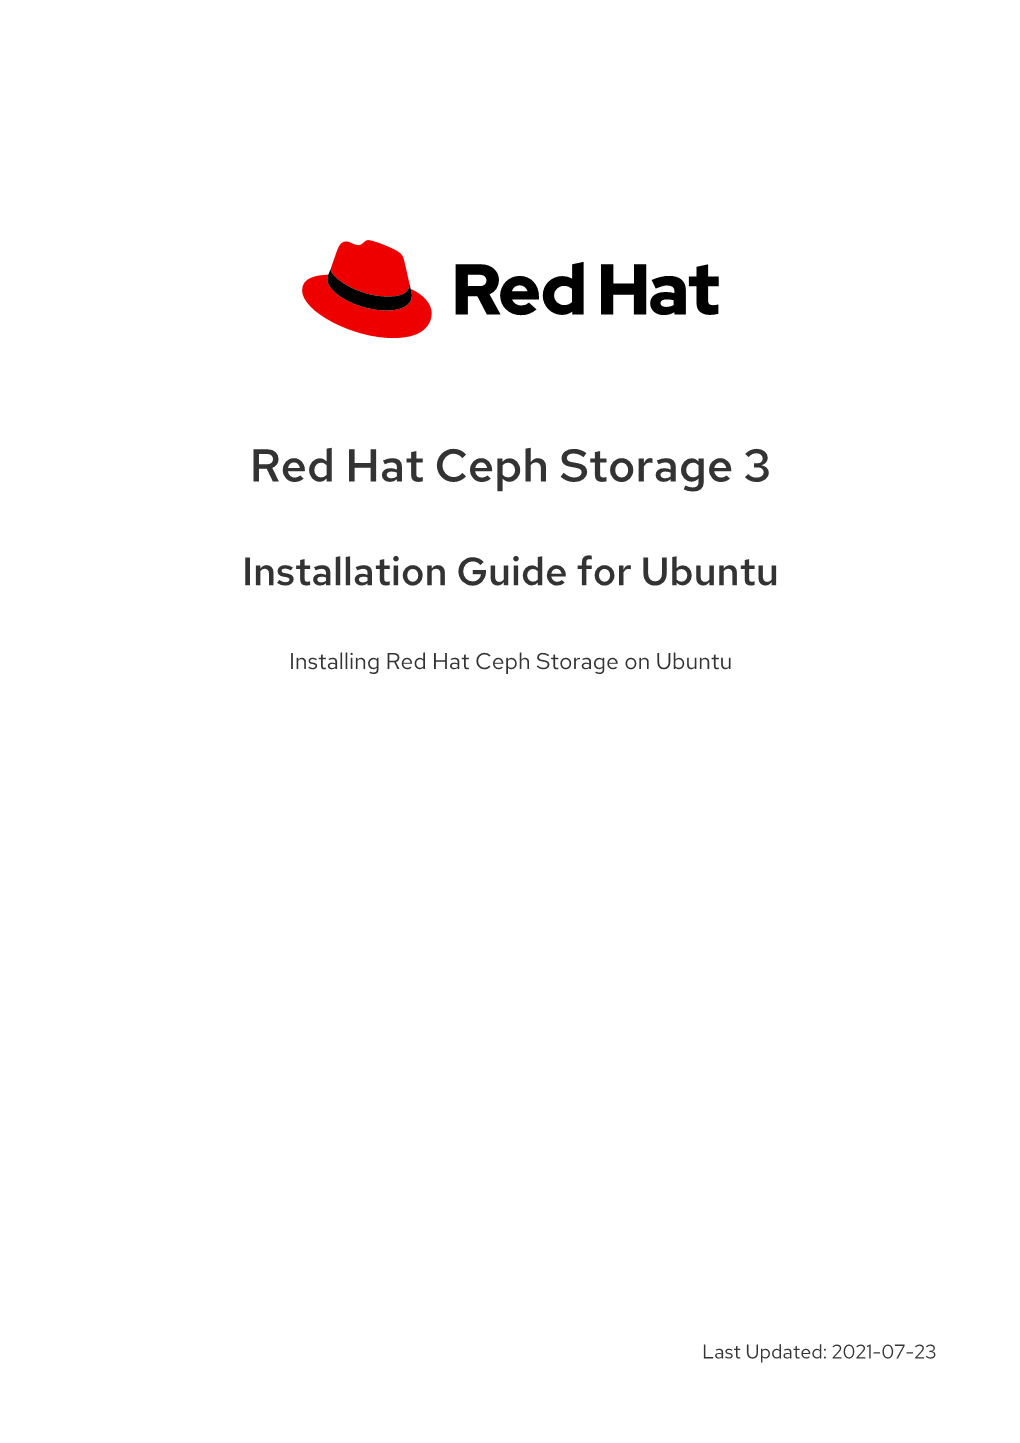 Red Hat Ceph Storage 3 Installation Guide for Ubuntu